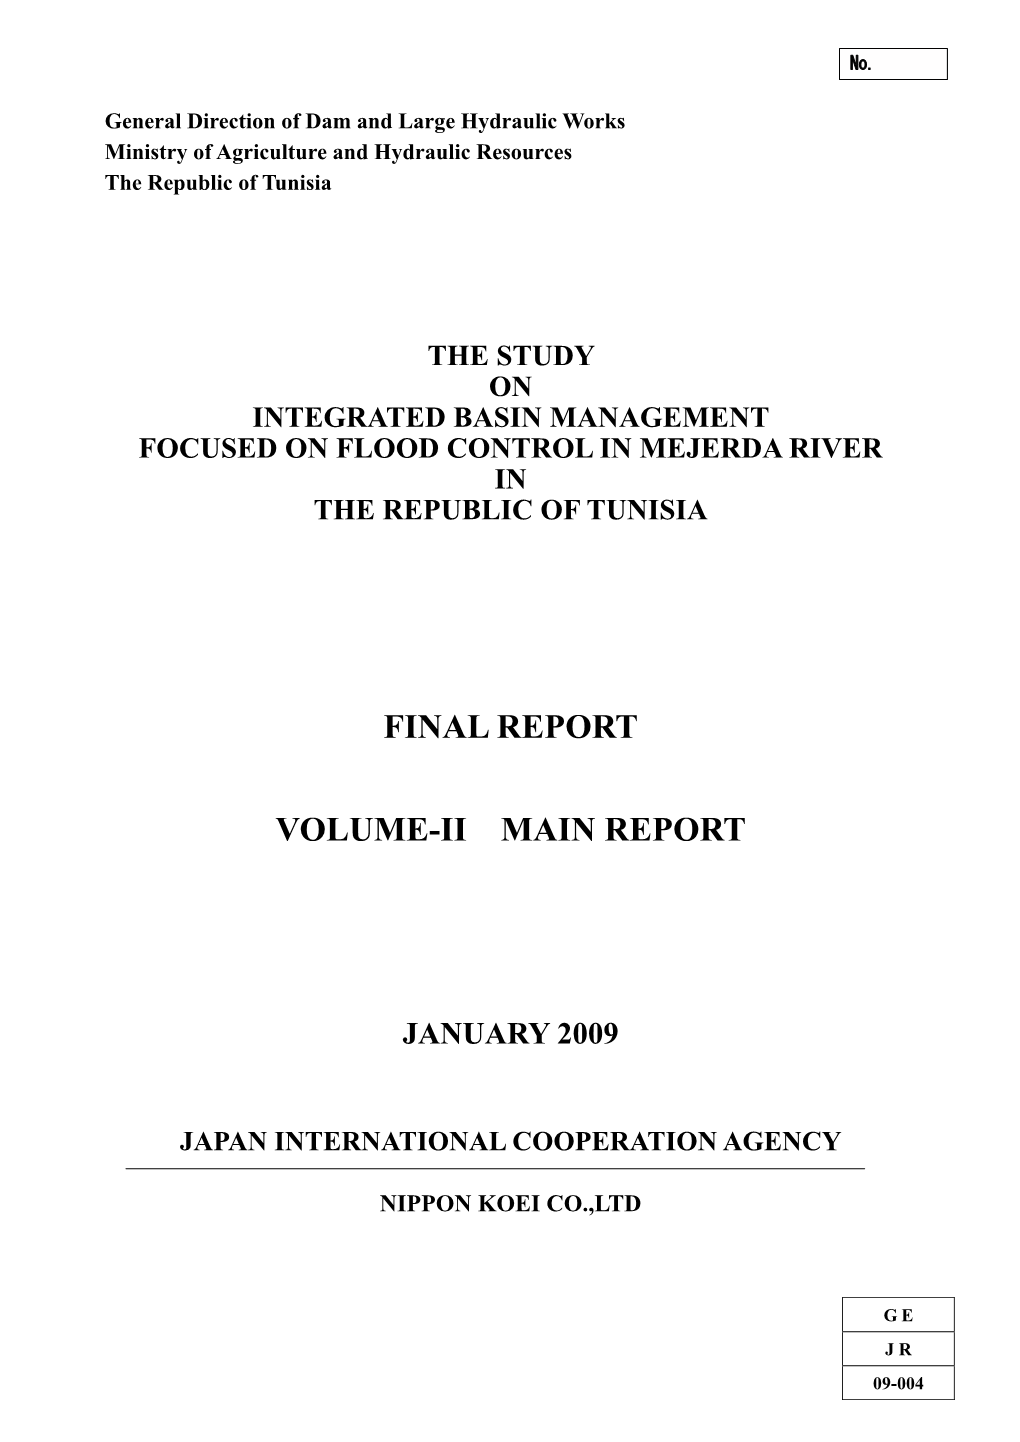 Final Report Volume-Ii Main Report